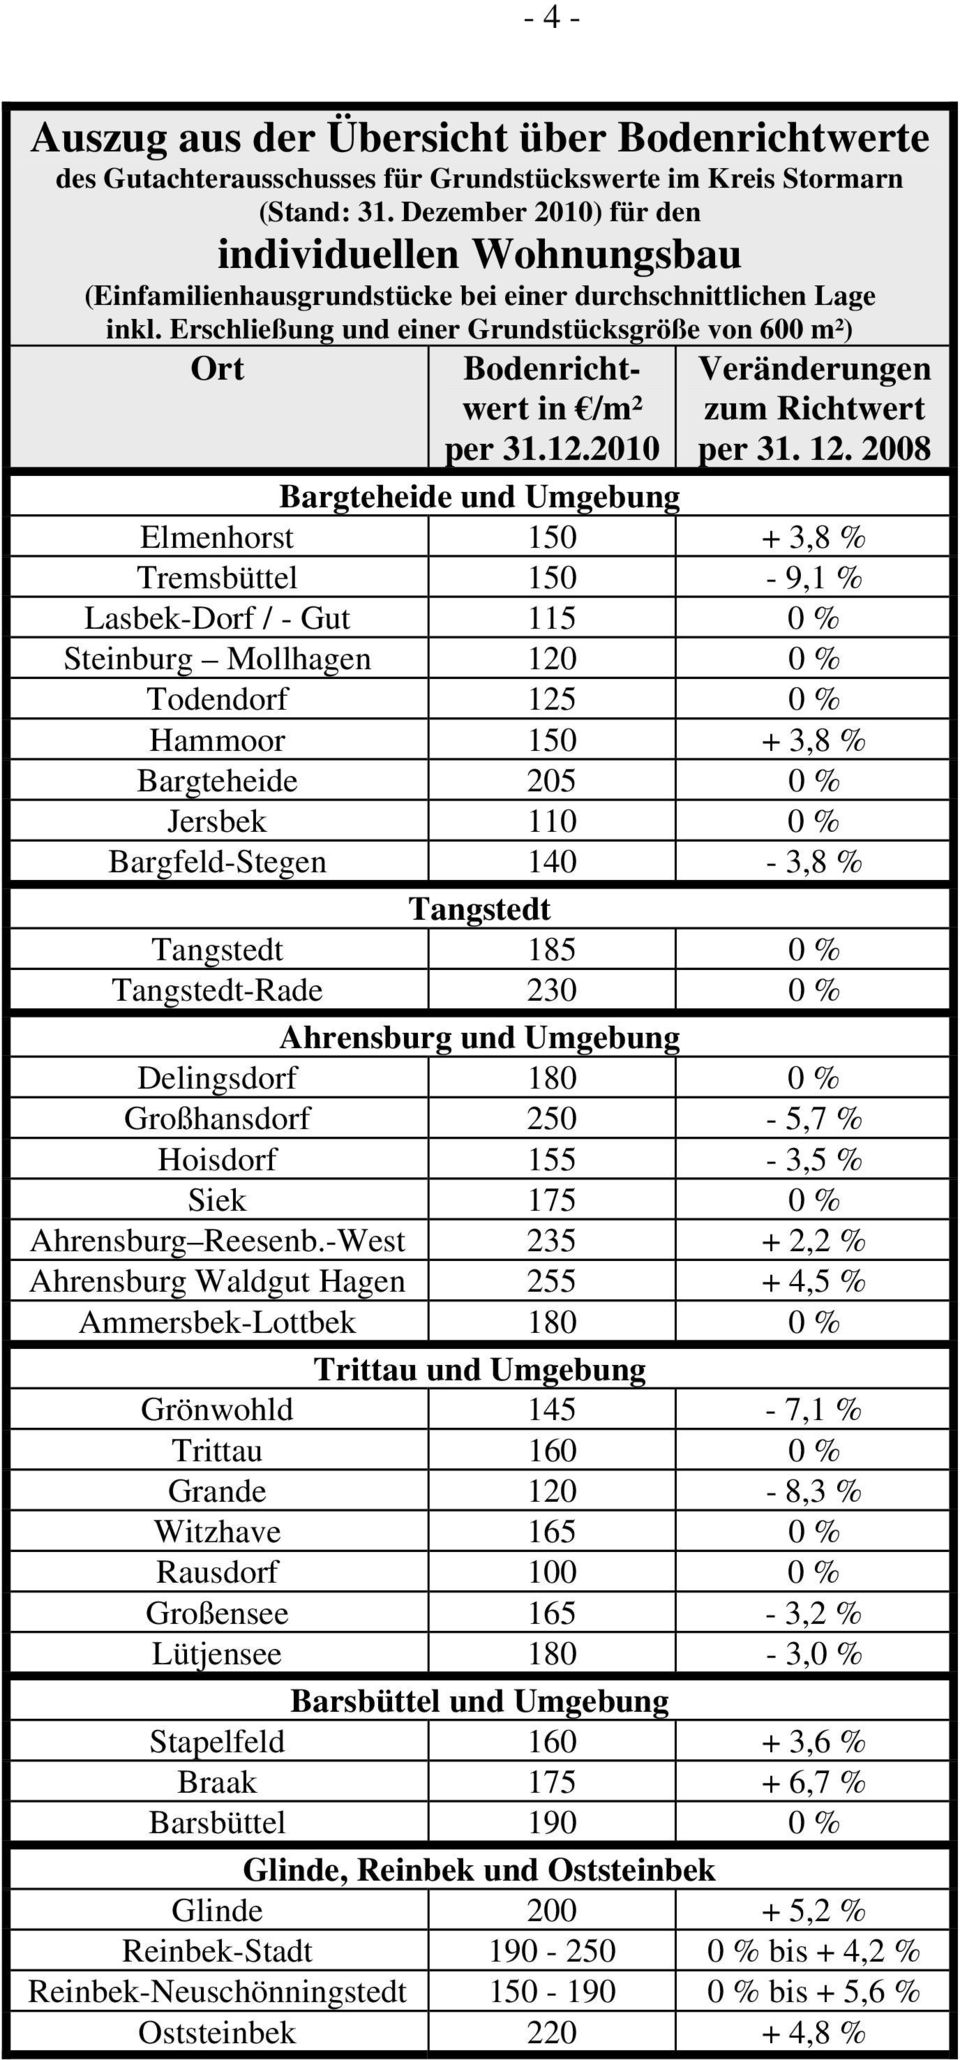 110 0 % Bargfeld-Stegen 140-3,8 % Tangstedt Tangstedt 185 0 % Tangstedt-Rade 230 0 % Ahrensburg und Umgebung Delingsdorf 180 0 % Großhansdorf 250-5,7 % Hoisdorf 155-3,5 % Siek 175 0 % Ahrensburg